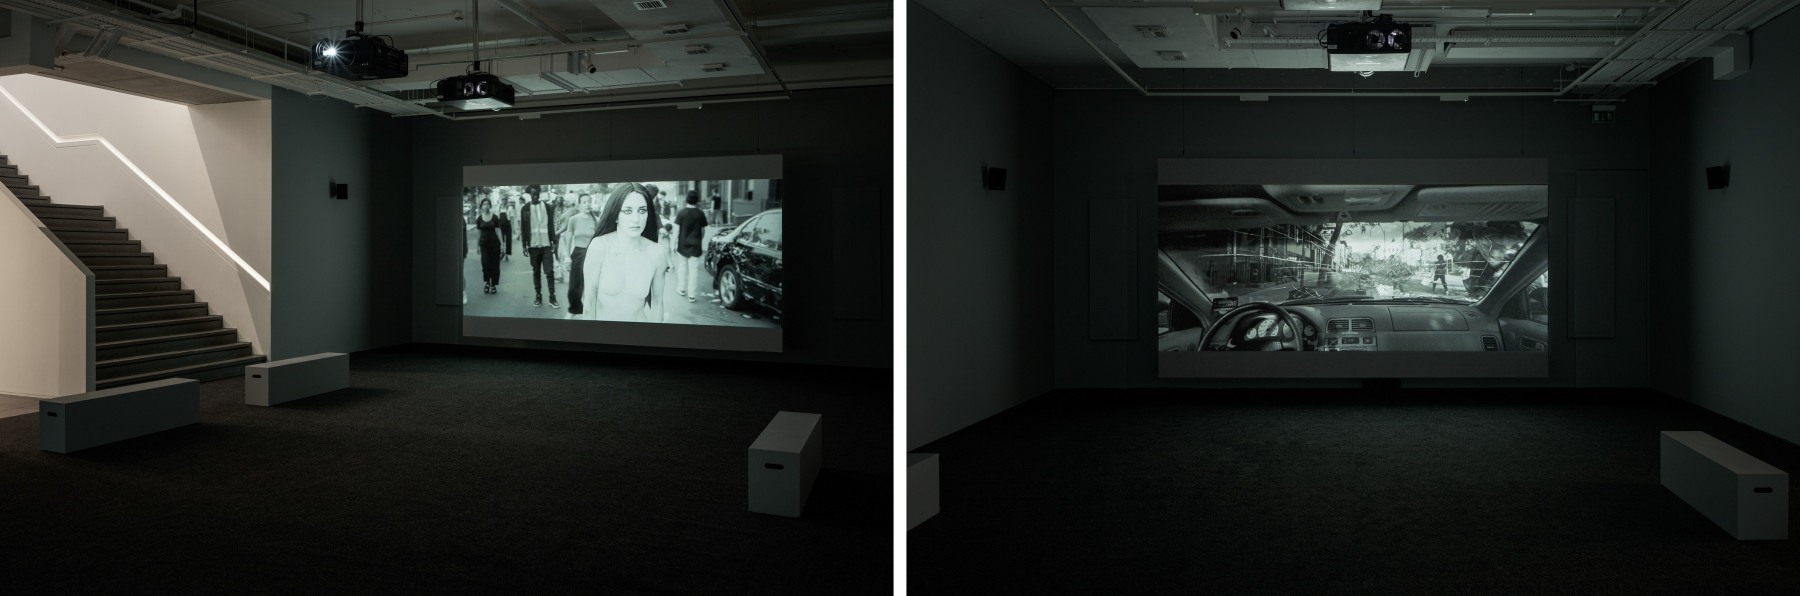 Shirin Neshat: The Fury - Goodman Gallery London - Viewing Room - Goodman Gallery Viewing Rooms